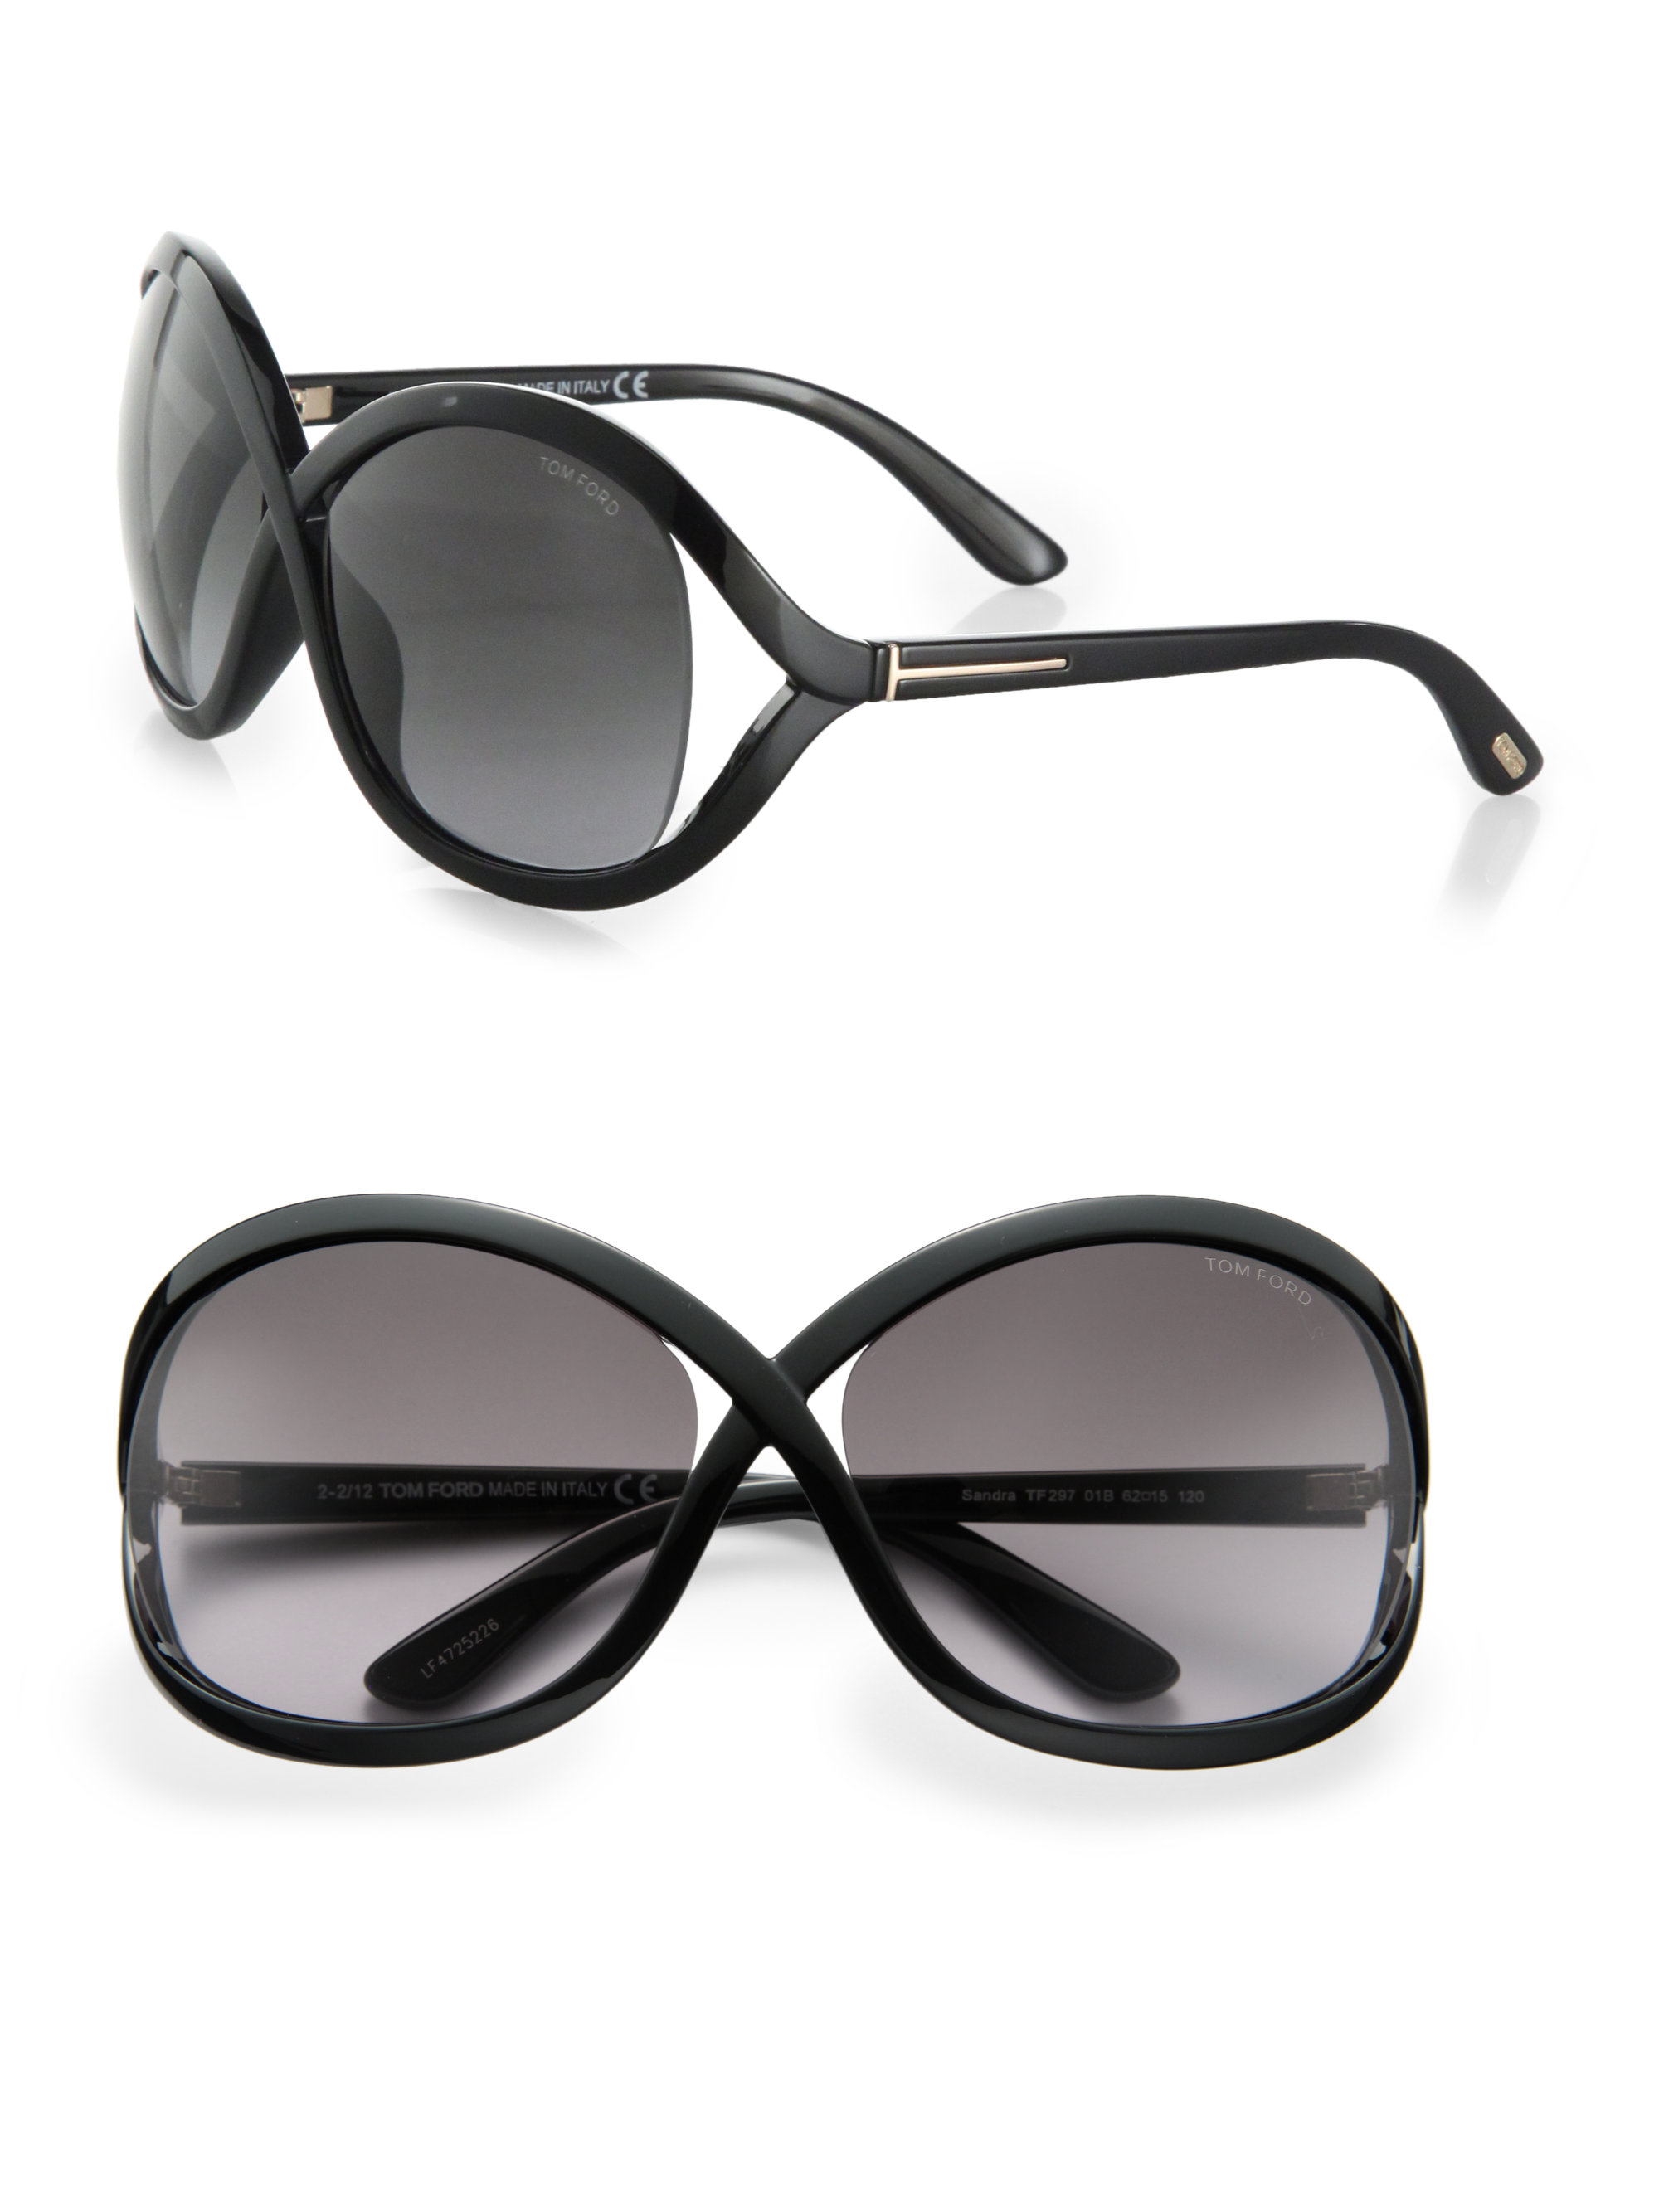 Lyst - Tom Ford Sandra 62Mm Oversized Crossover Round Sunglasses in Black